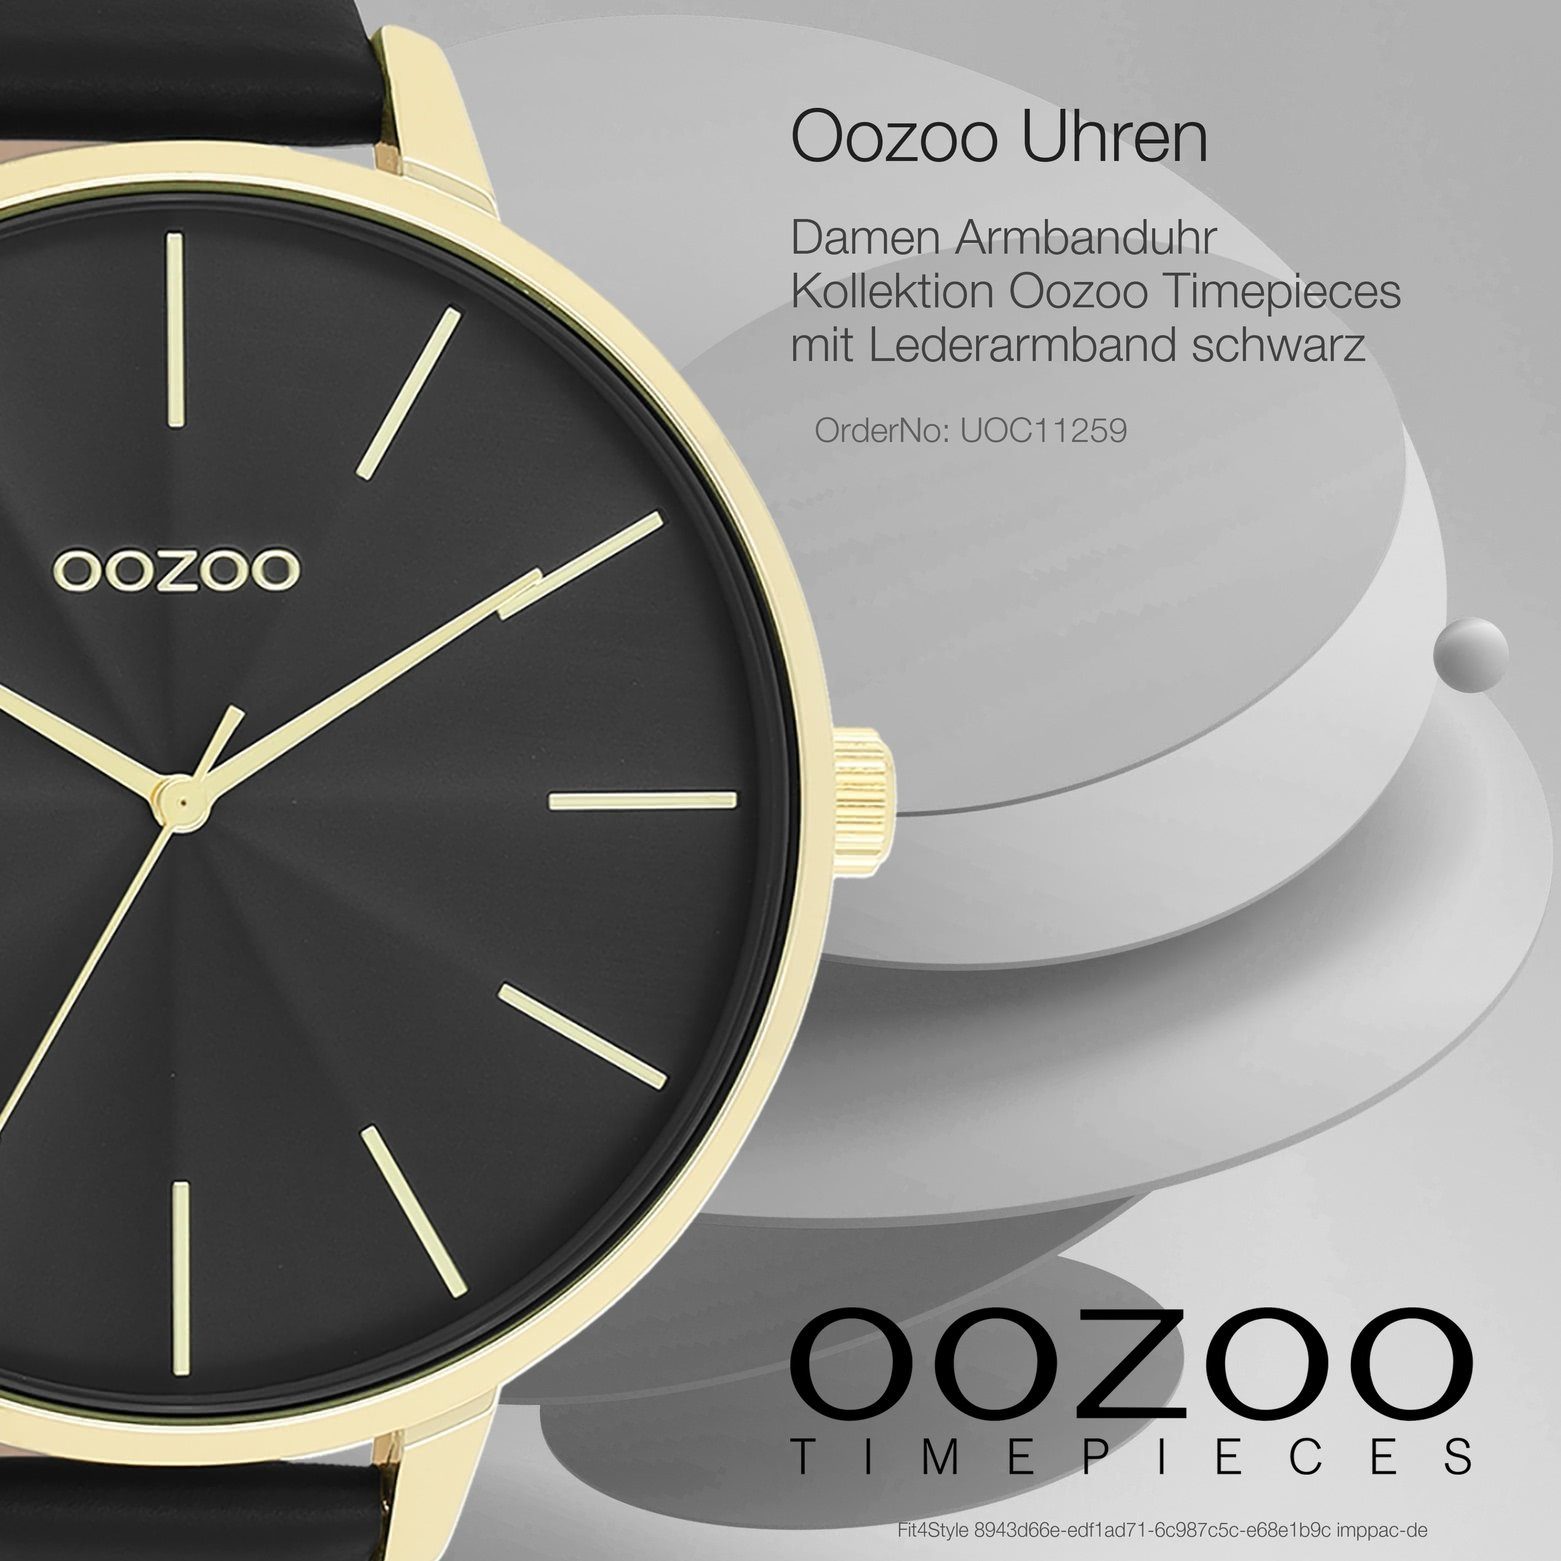 (ca. Damenuhr Oozoo extra Analog, Quarzuhr Lederarmband, Fashion-Style OOZOO Damen Armbanduhr 48mm) Timepieces rund, groß